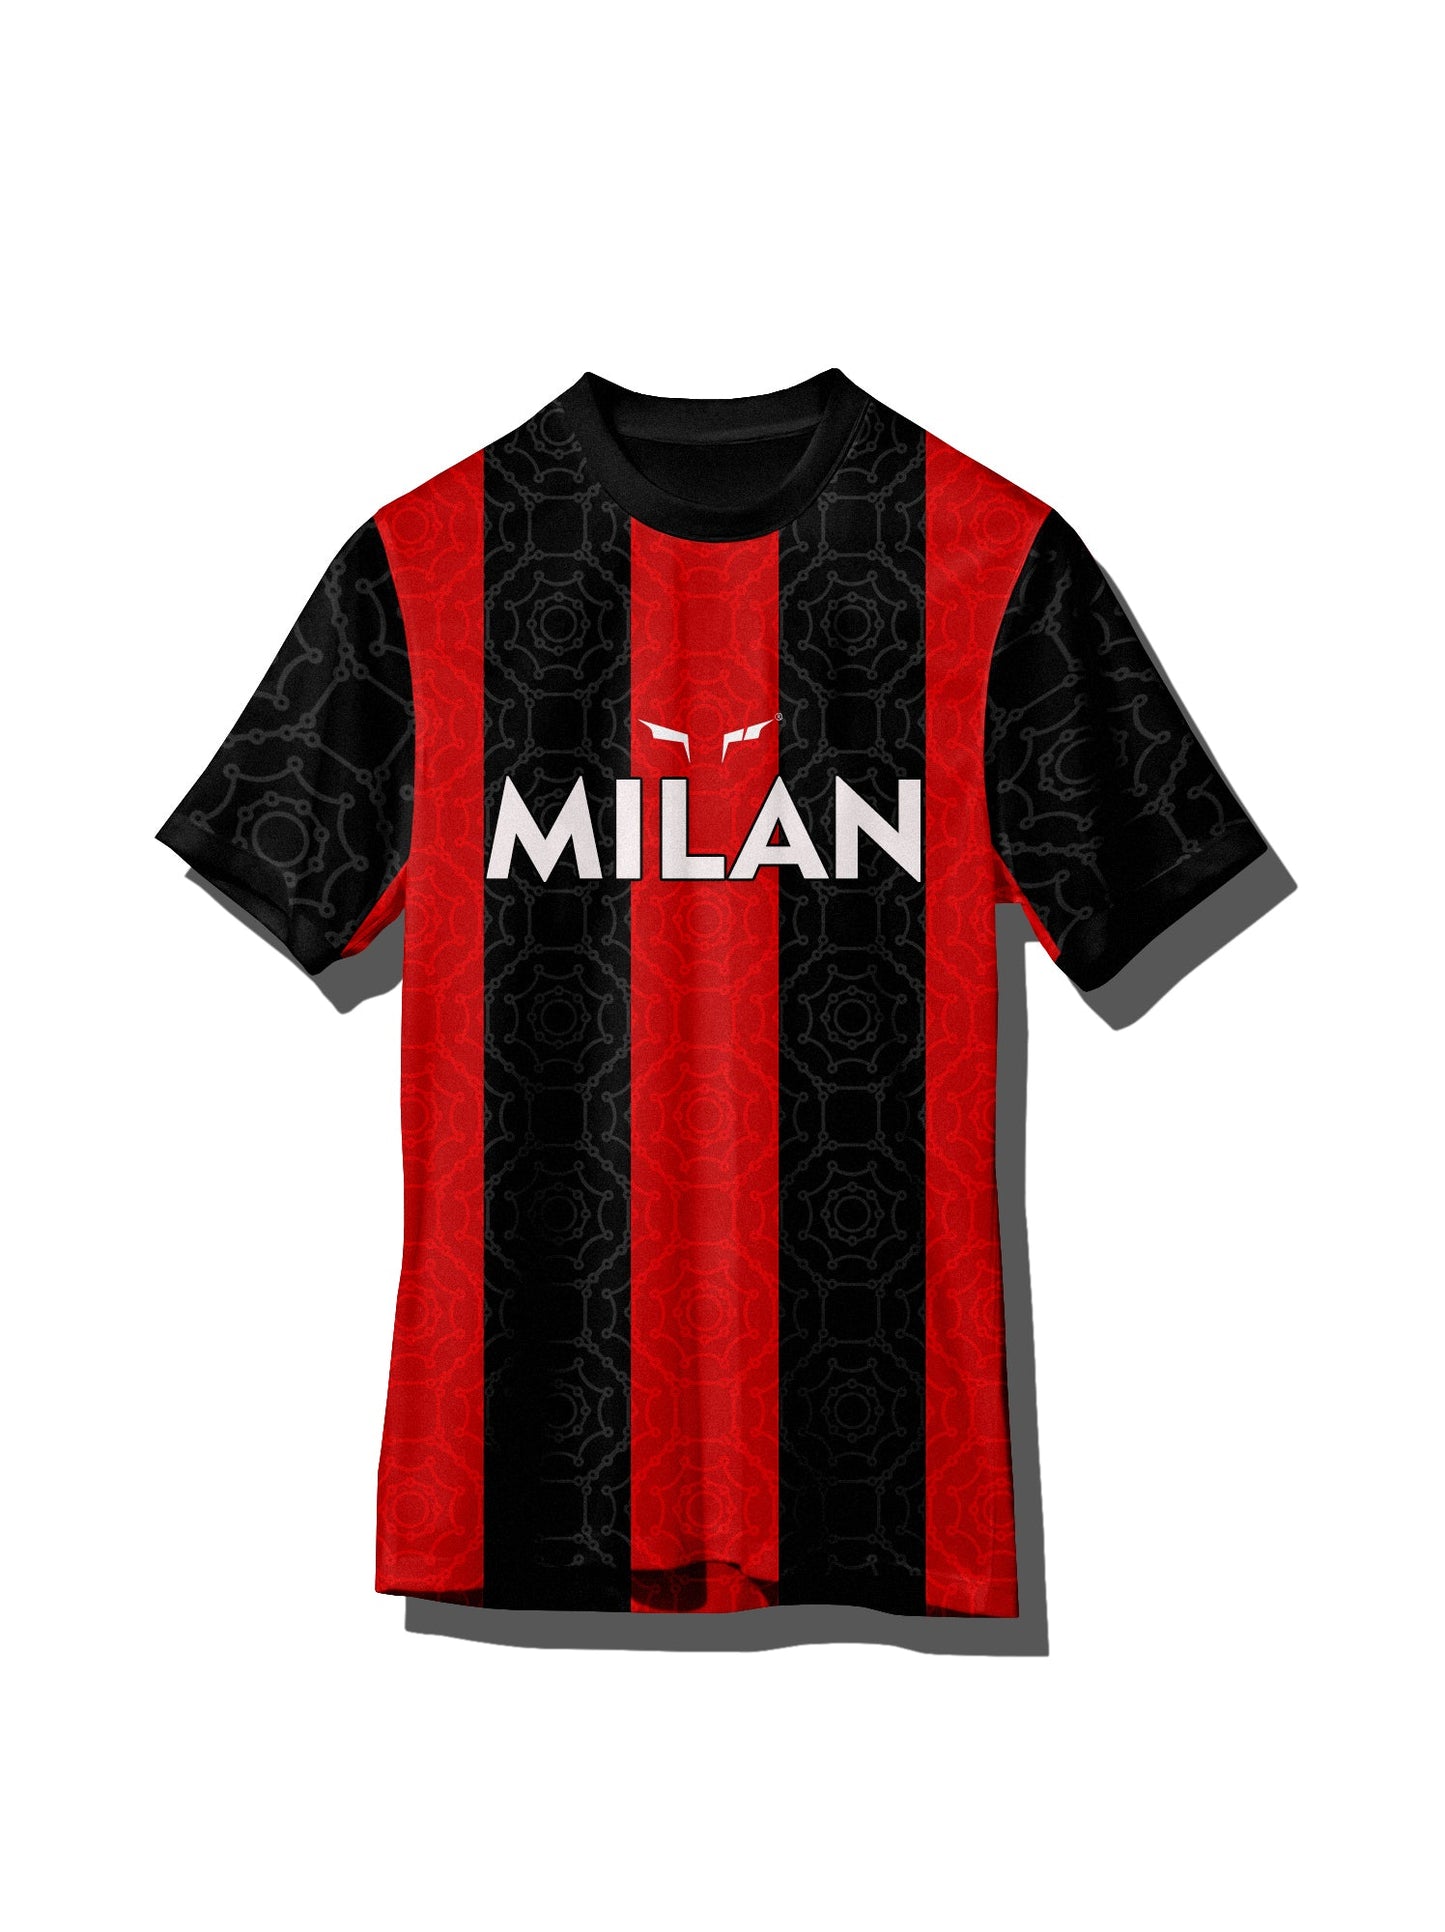 Milan 2021 Concept Jersey